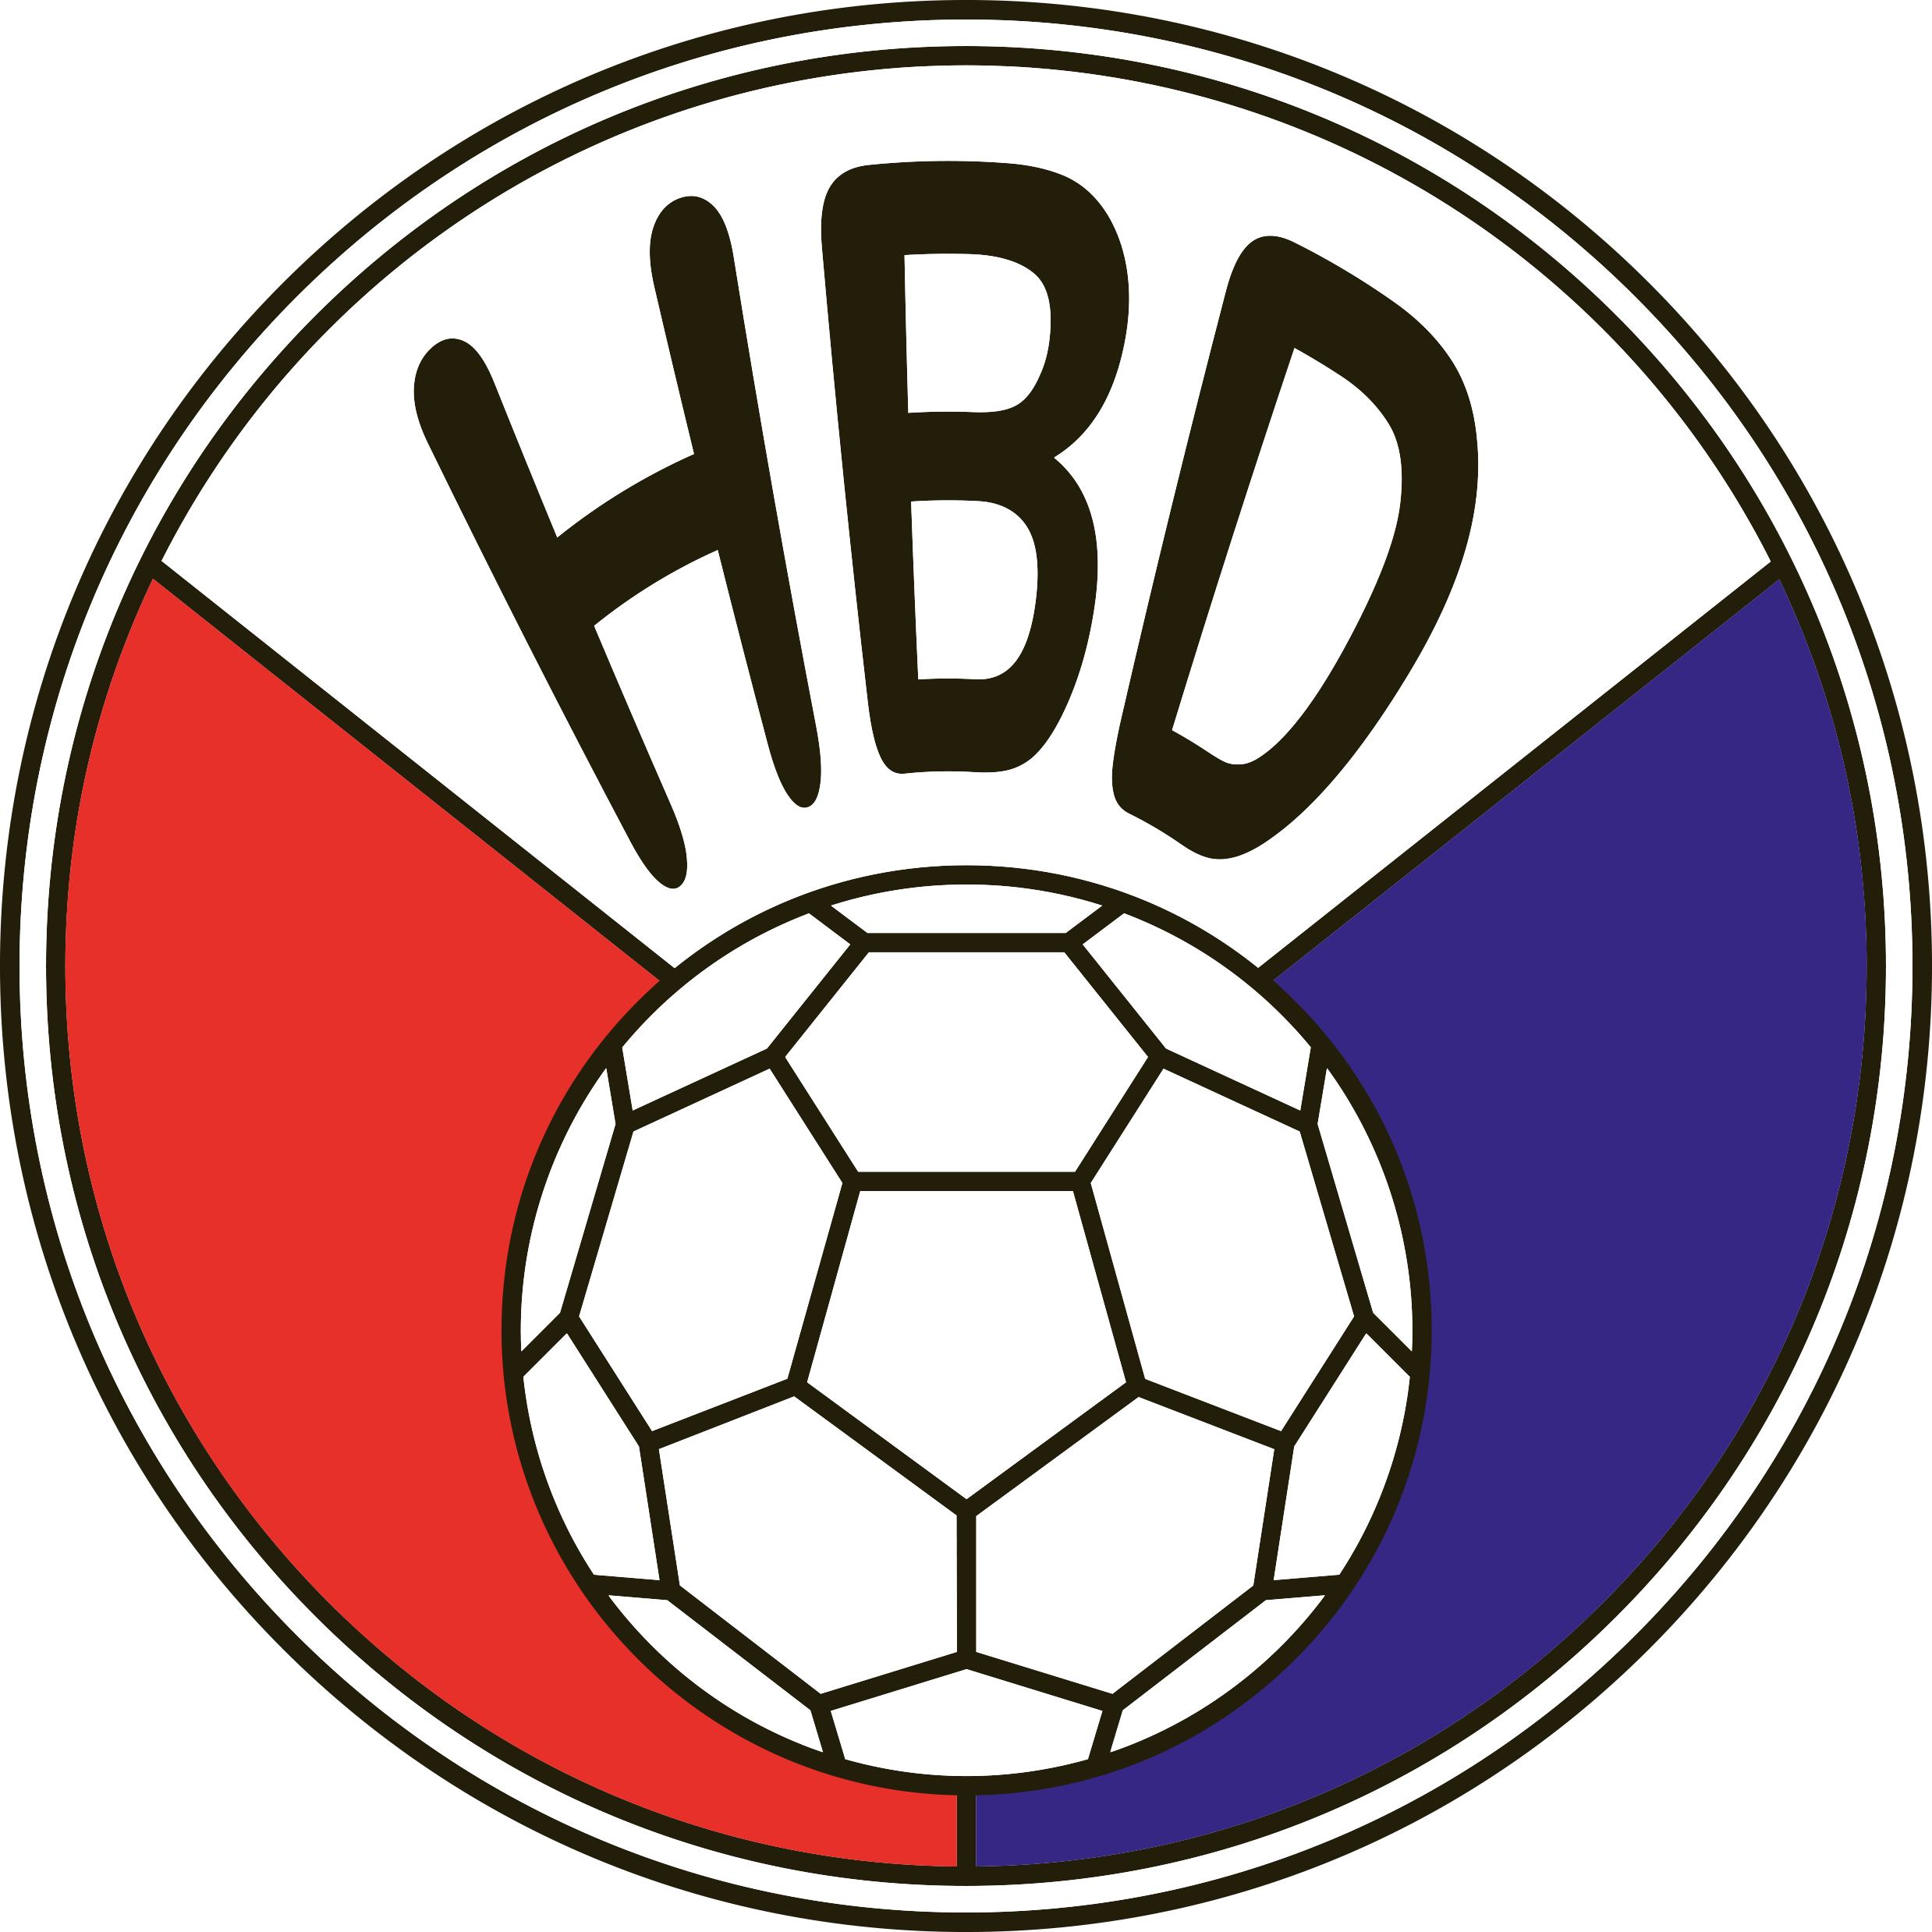 Hbd_logo1